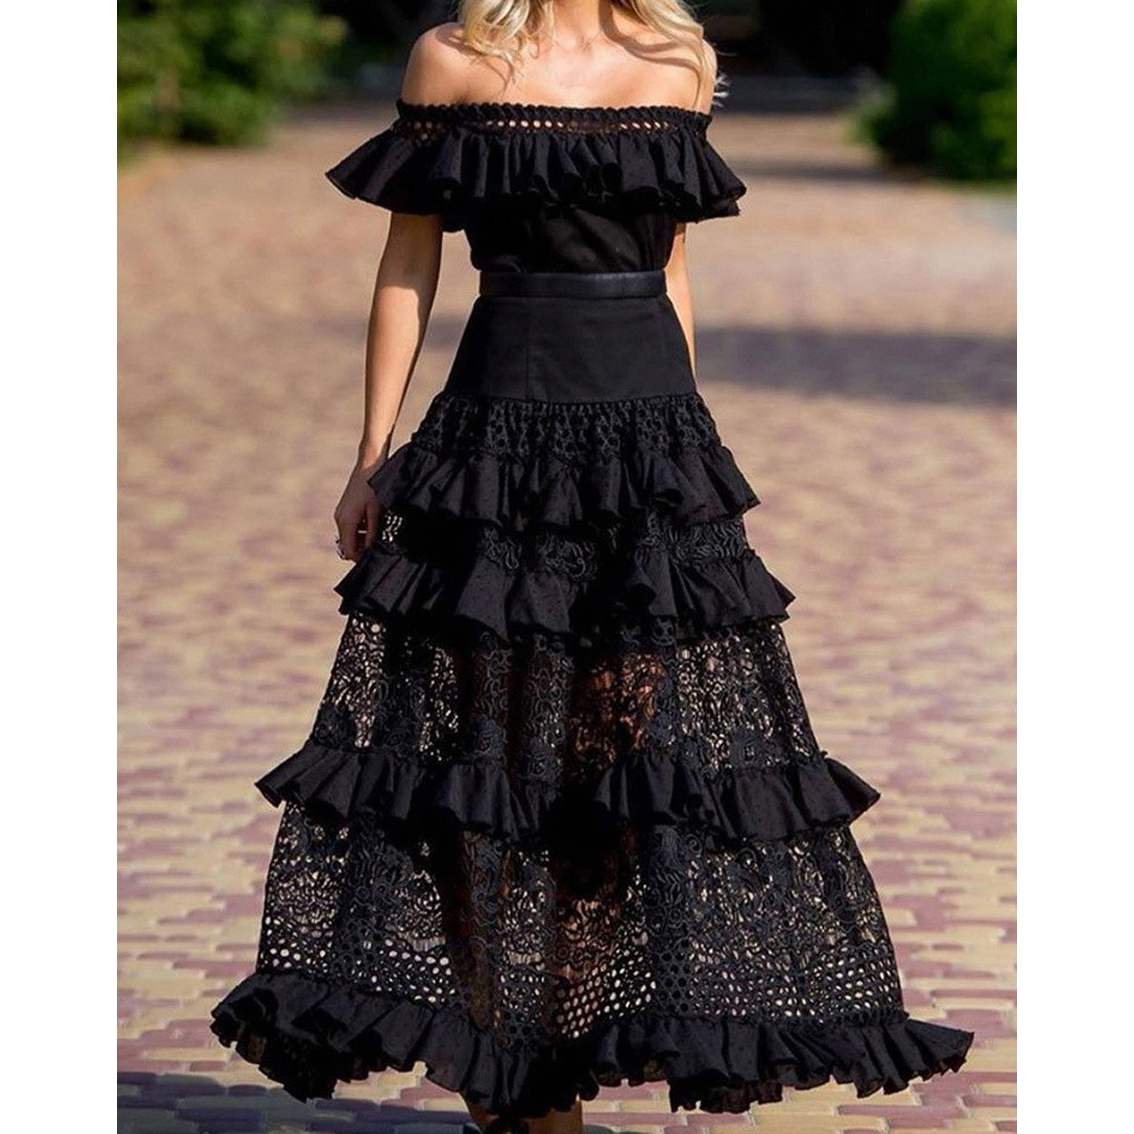 Sexy Lace Strap Maxi Dress - Black, Xxl